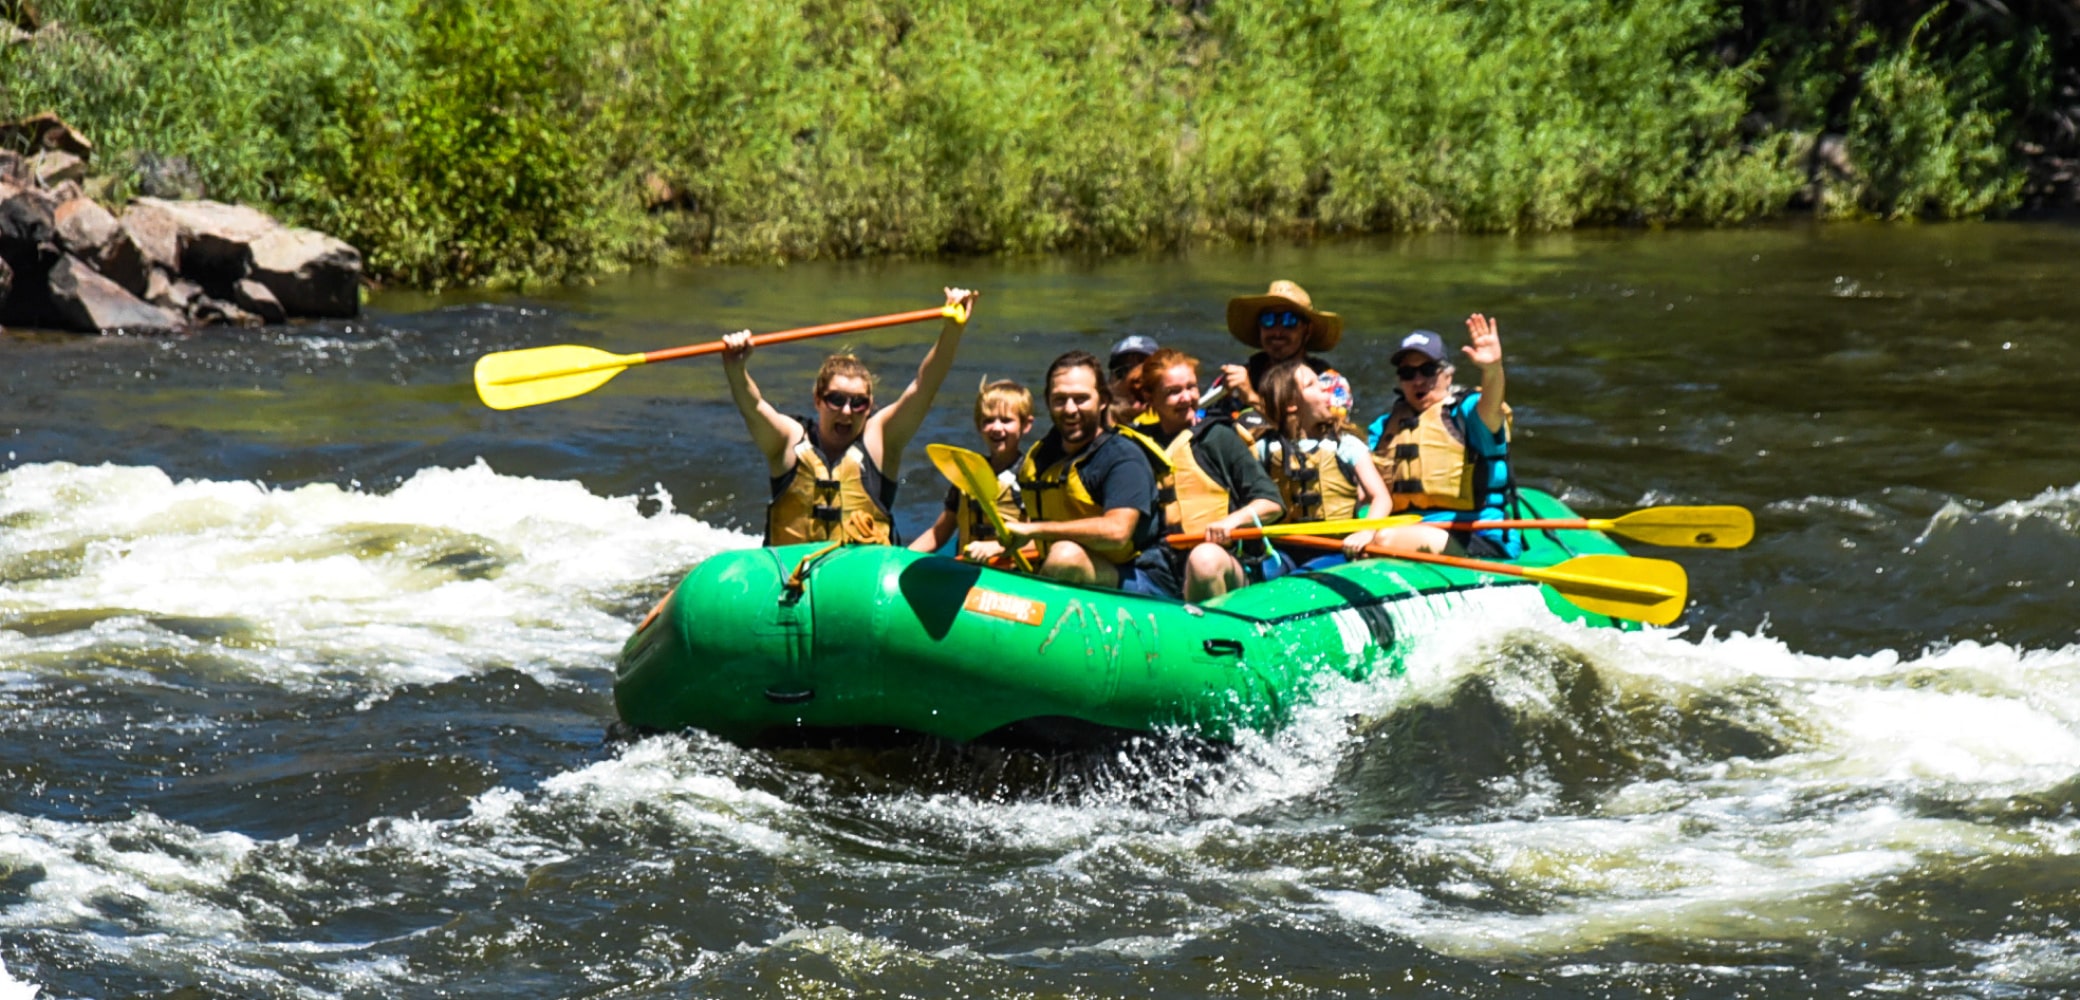 Beginner rafting Colorado with people hitting some minor rapids